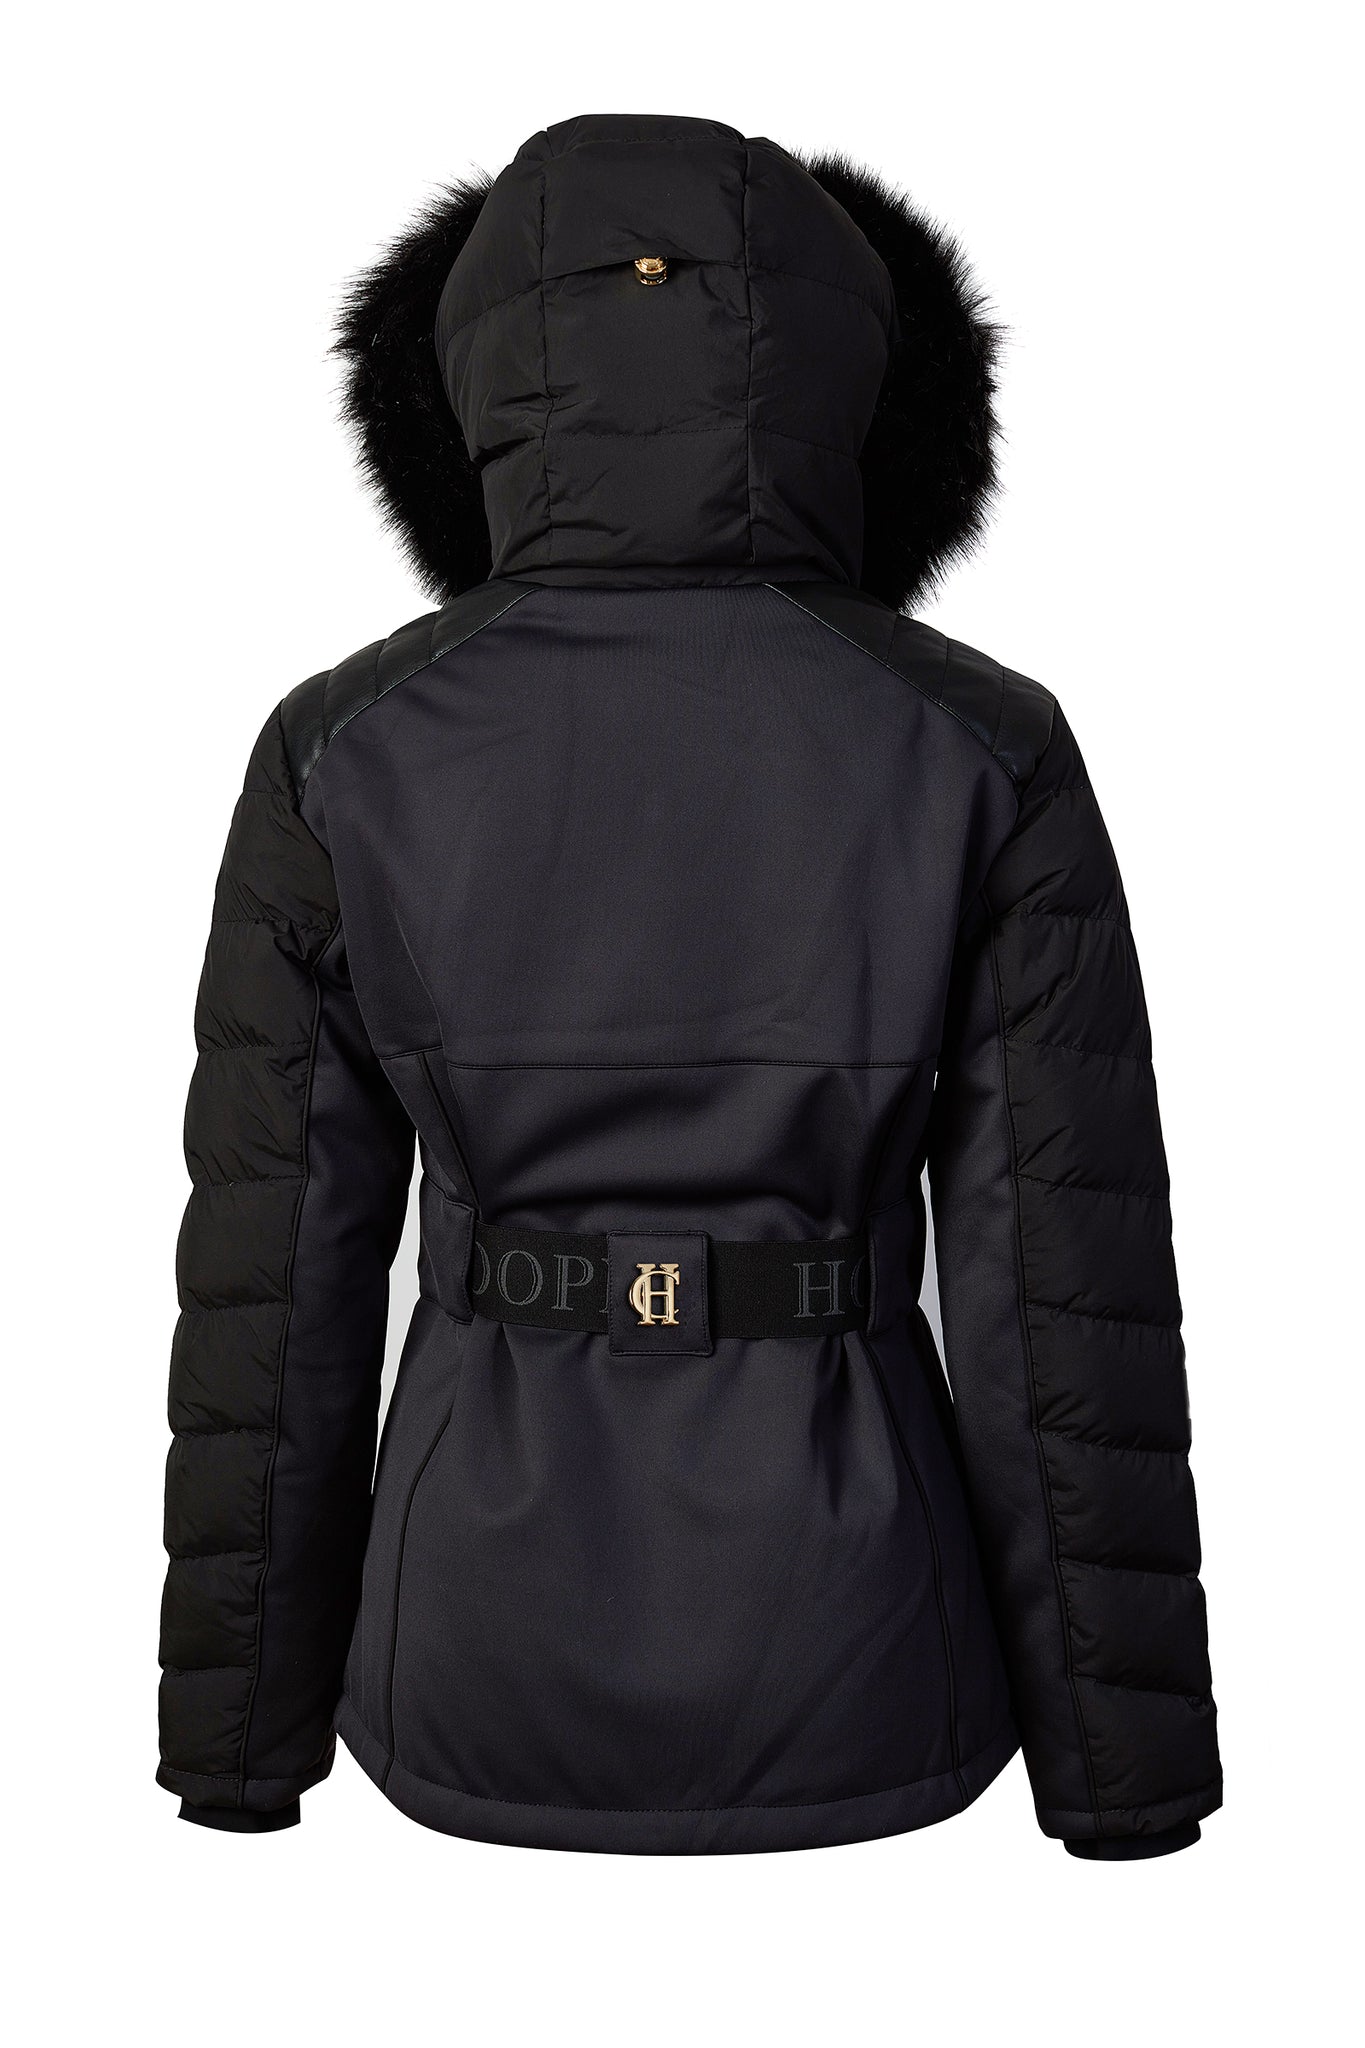 Ski Jacket (Black)